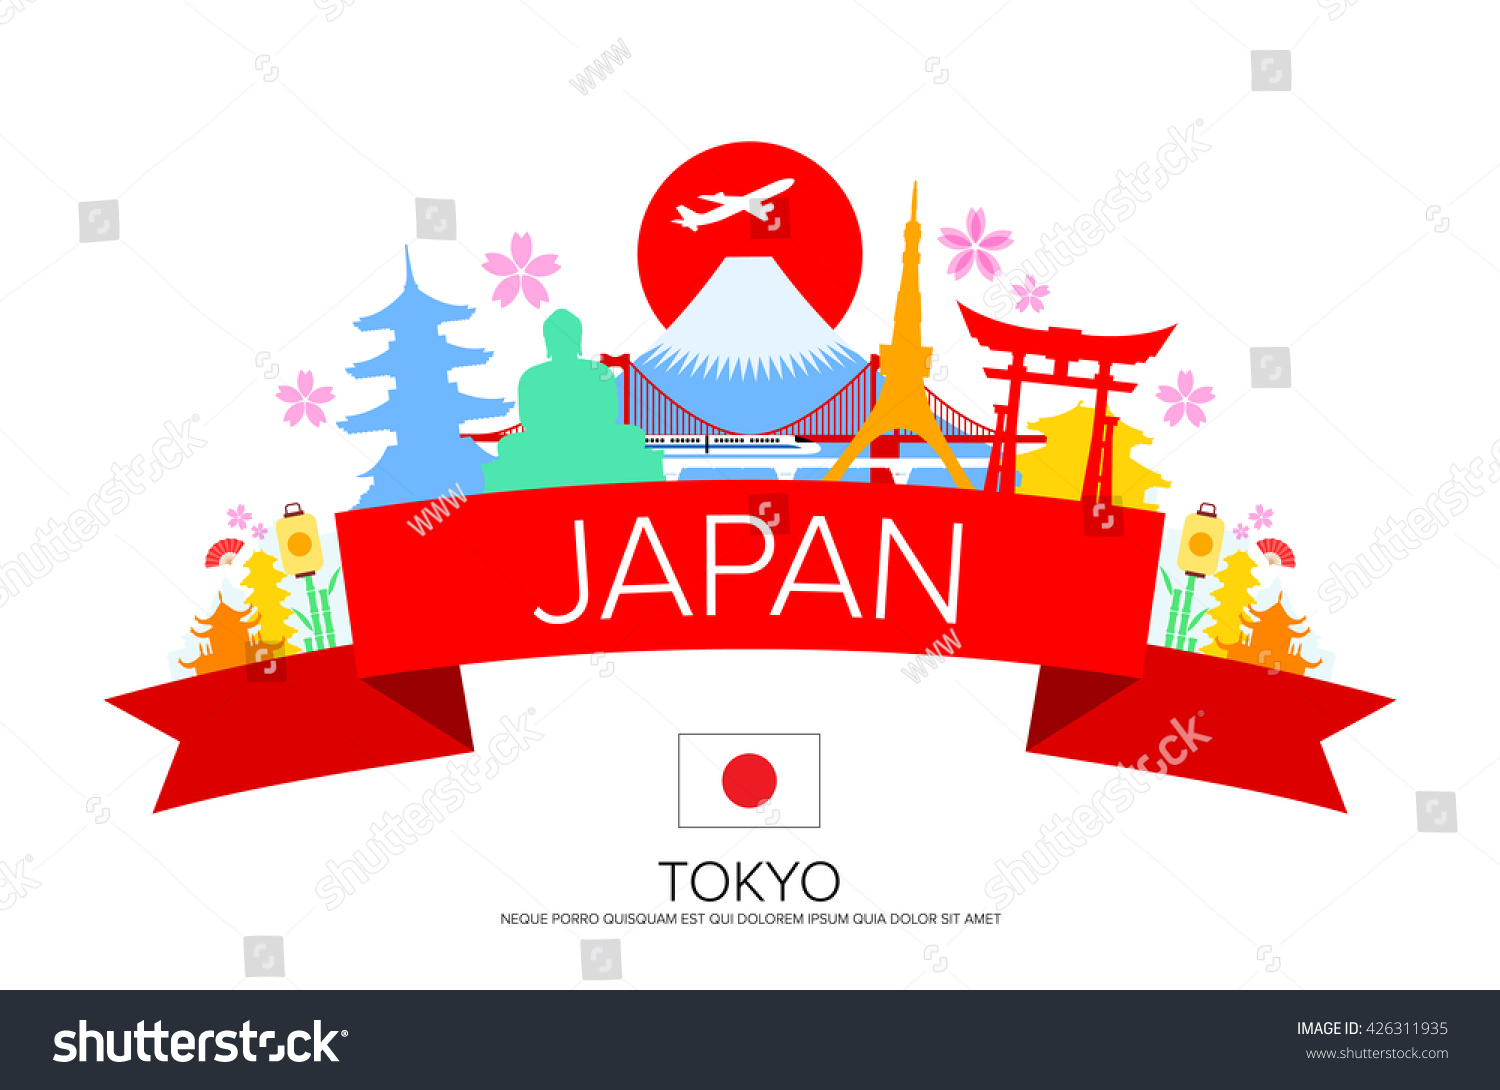 Japan Travel Tokyo Travel Landmarks Vector Stock Vector 426311935